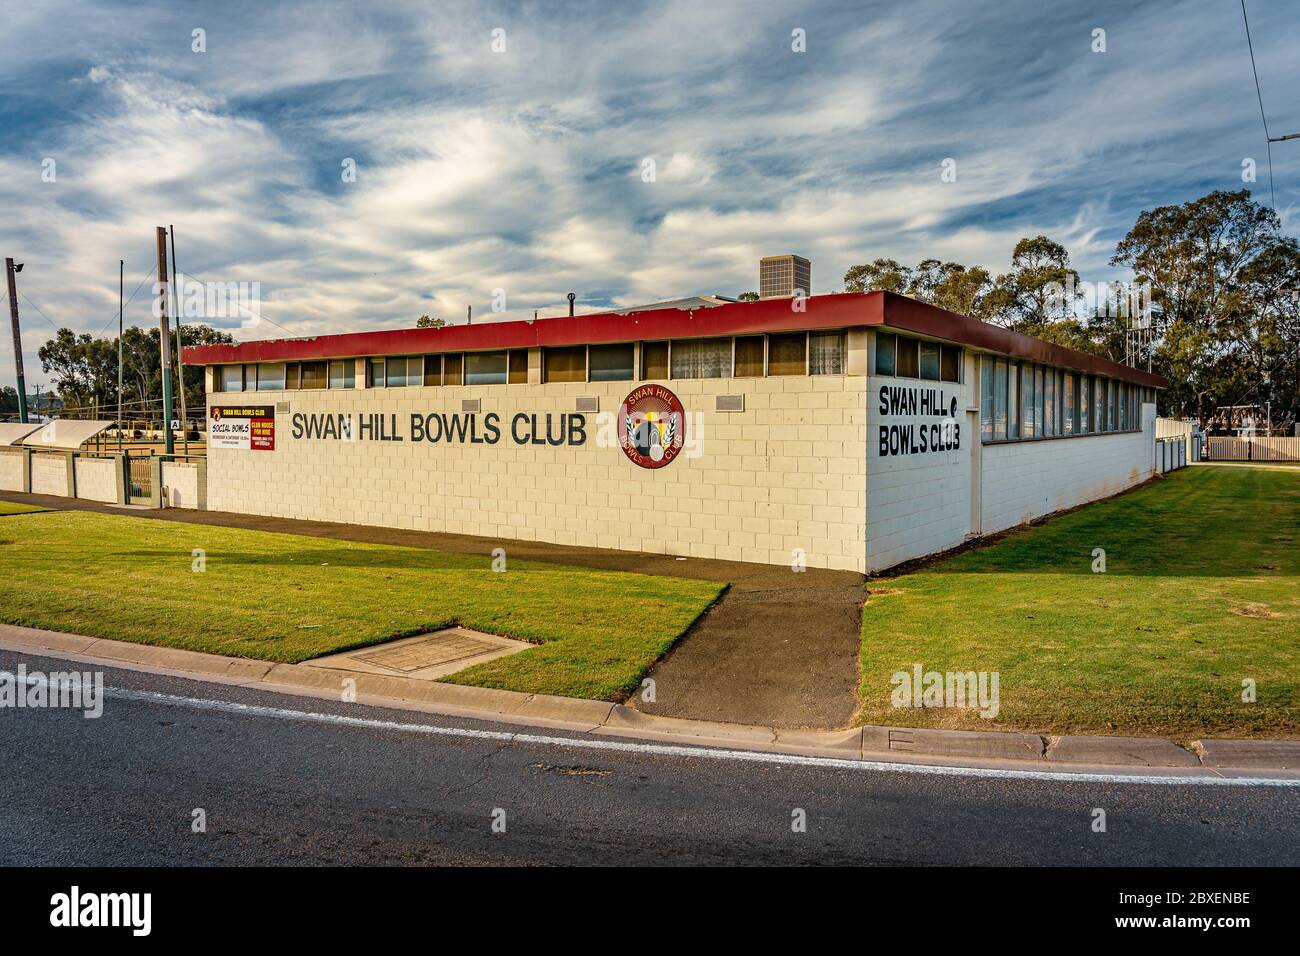 Swan Hill, Victoria, Australia - Local bowls club building Stock Photo